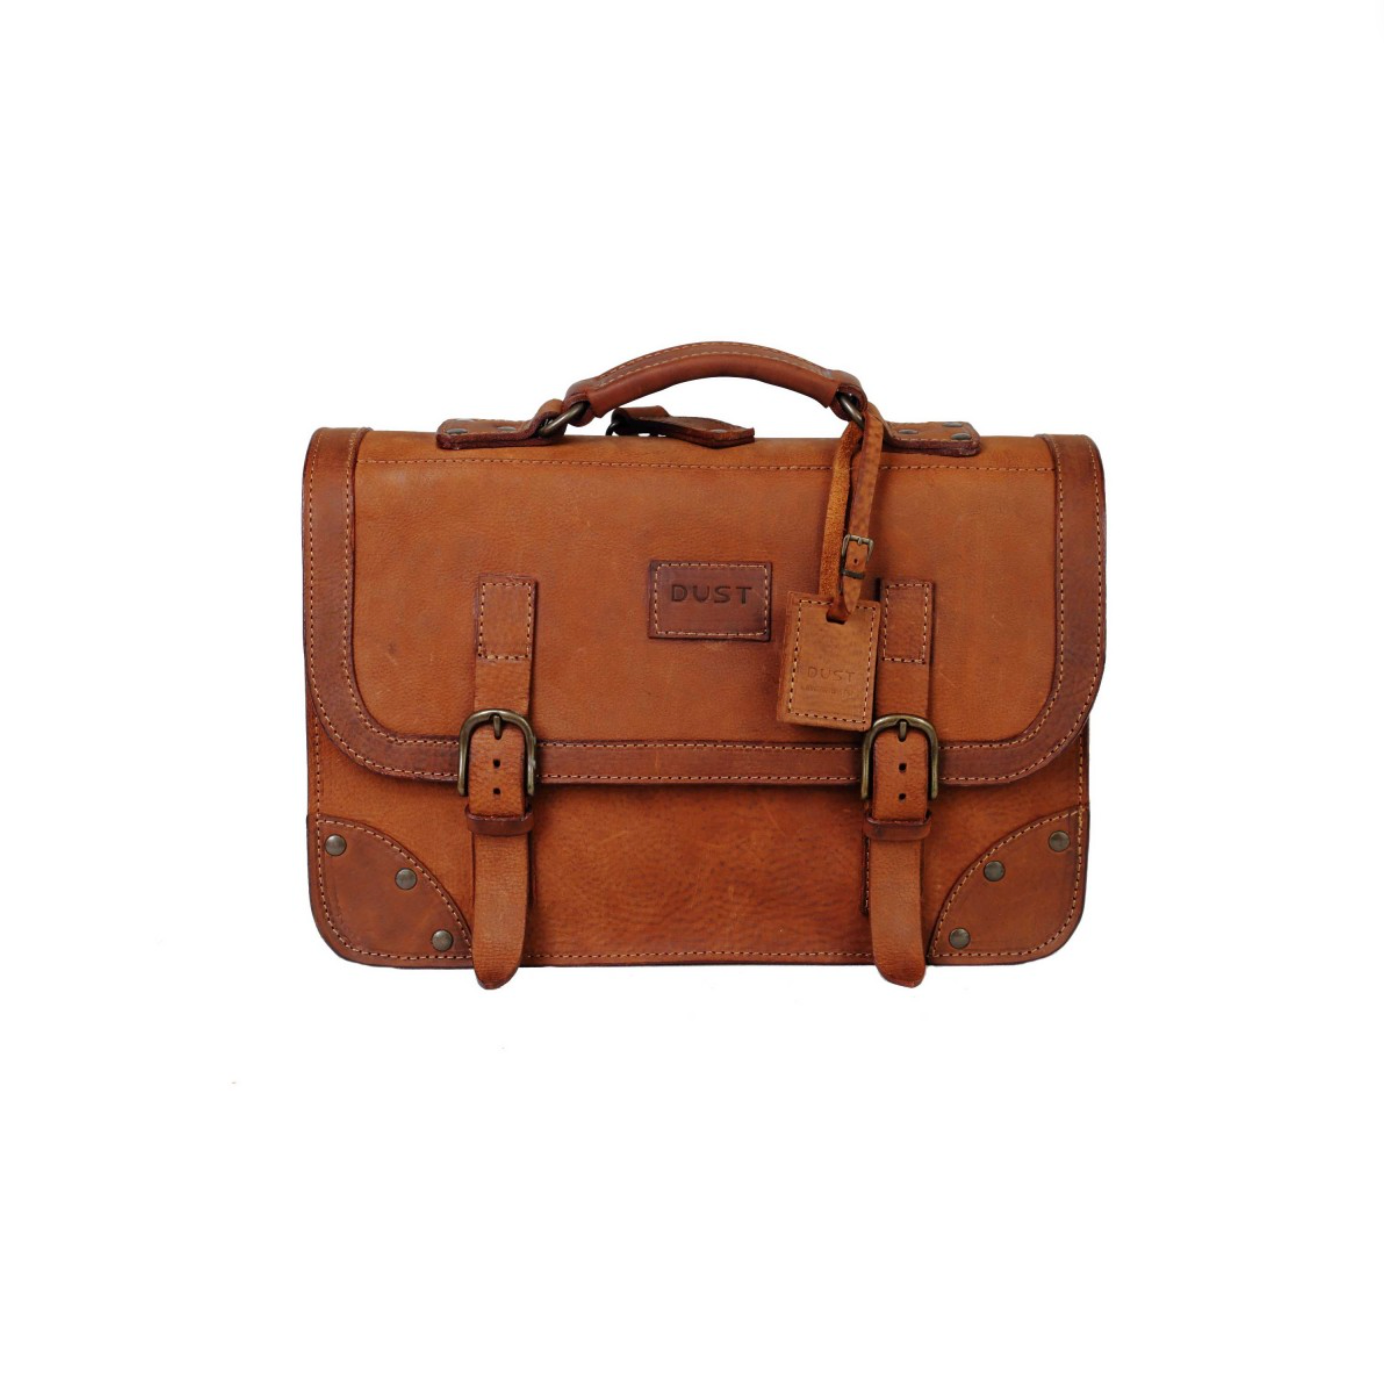 Mod 101 Business Bag Heritage Brown